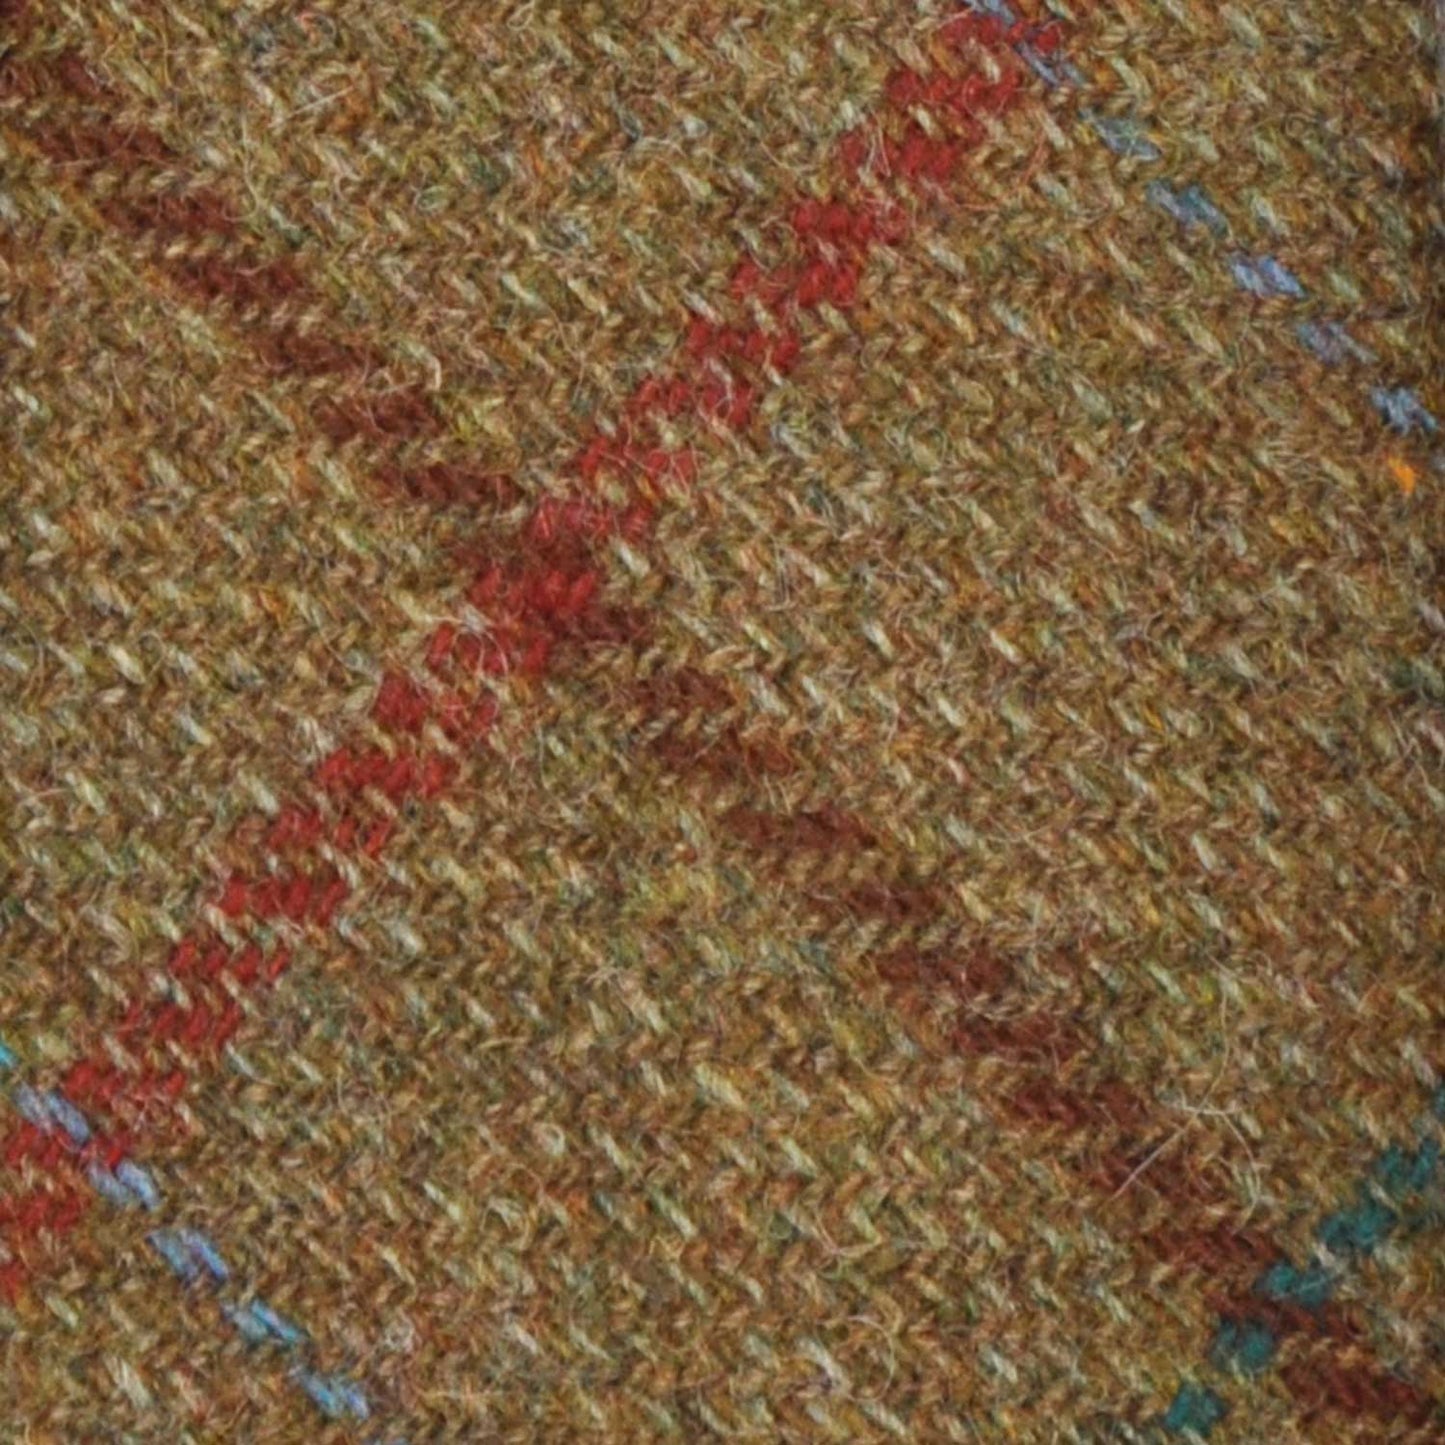 Clay Brown Tweed Tie Windowpane Multicolor